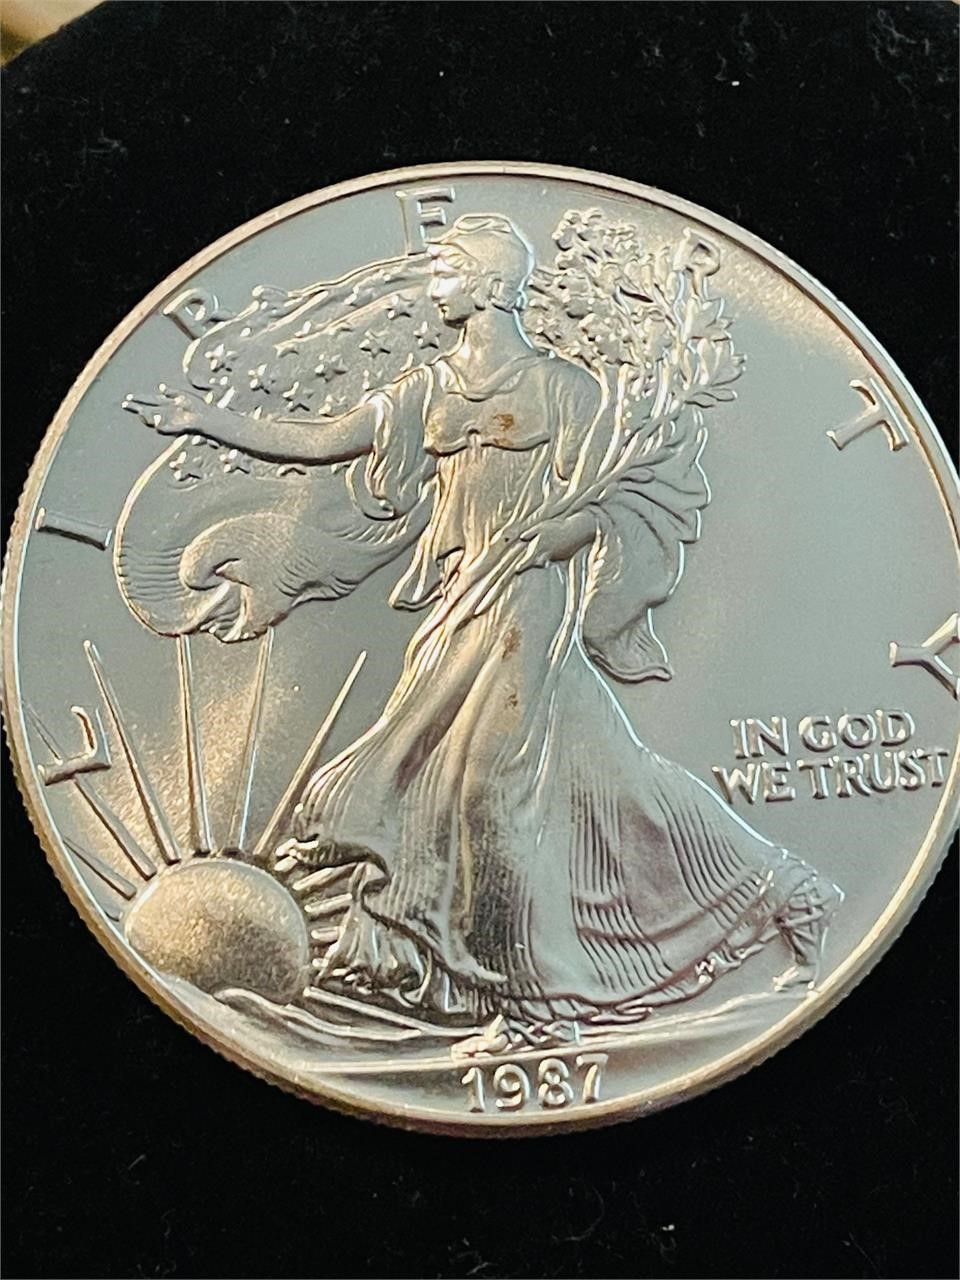 1987 Mint .999 1oz American Silver Eagle Coin